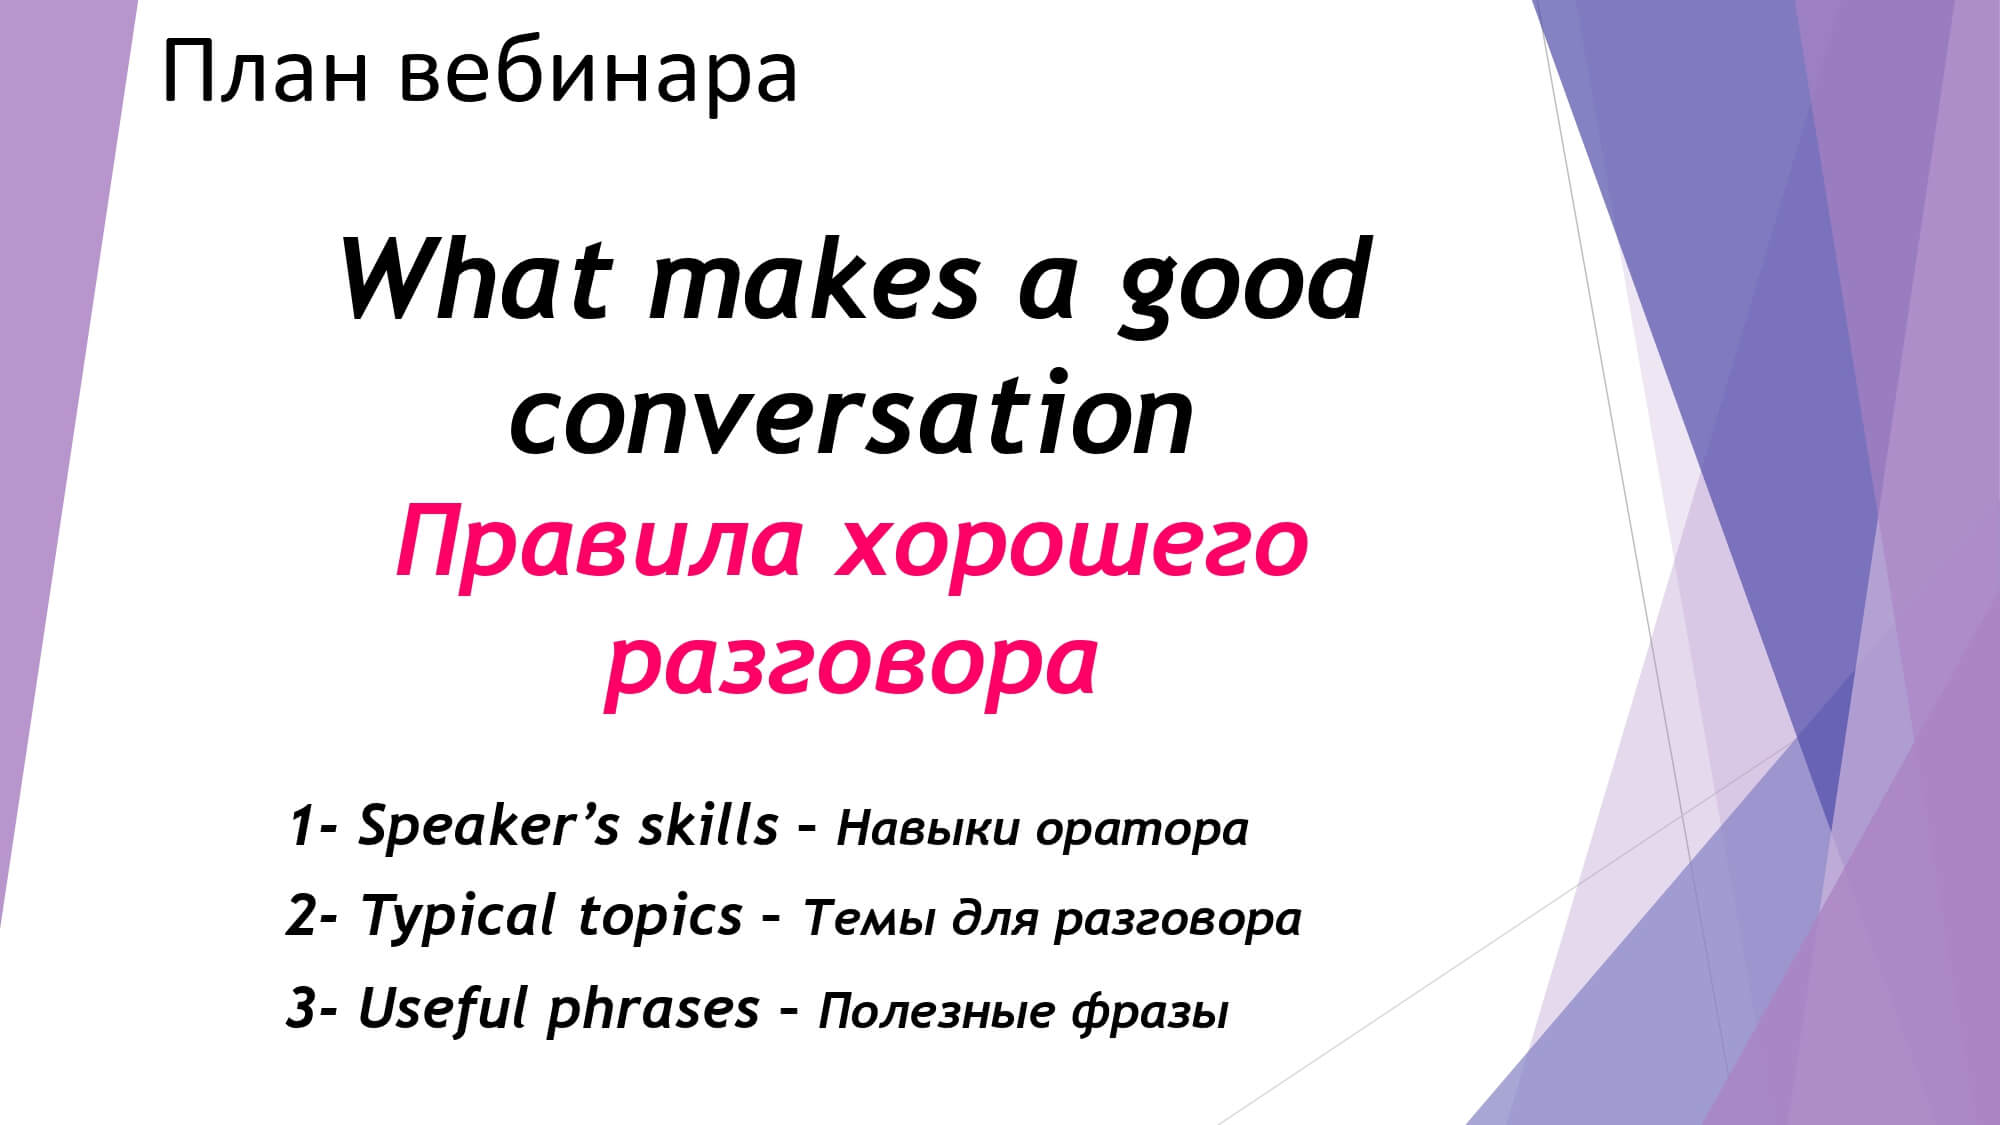 What makes a good conversation - Правила хорошего разговора